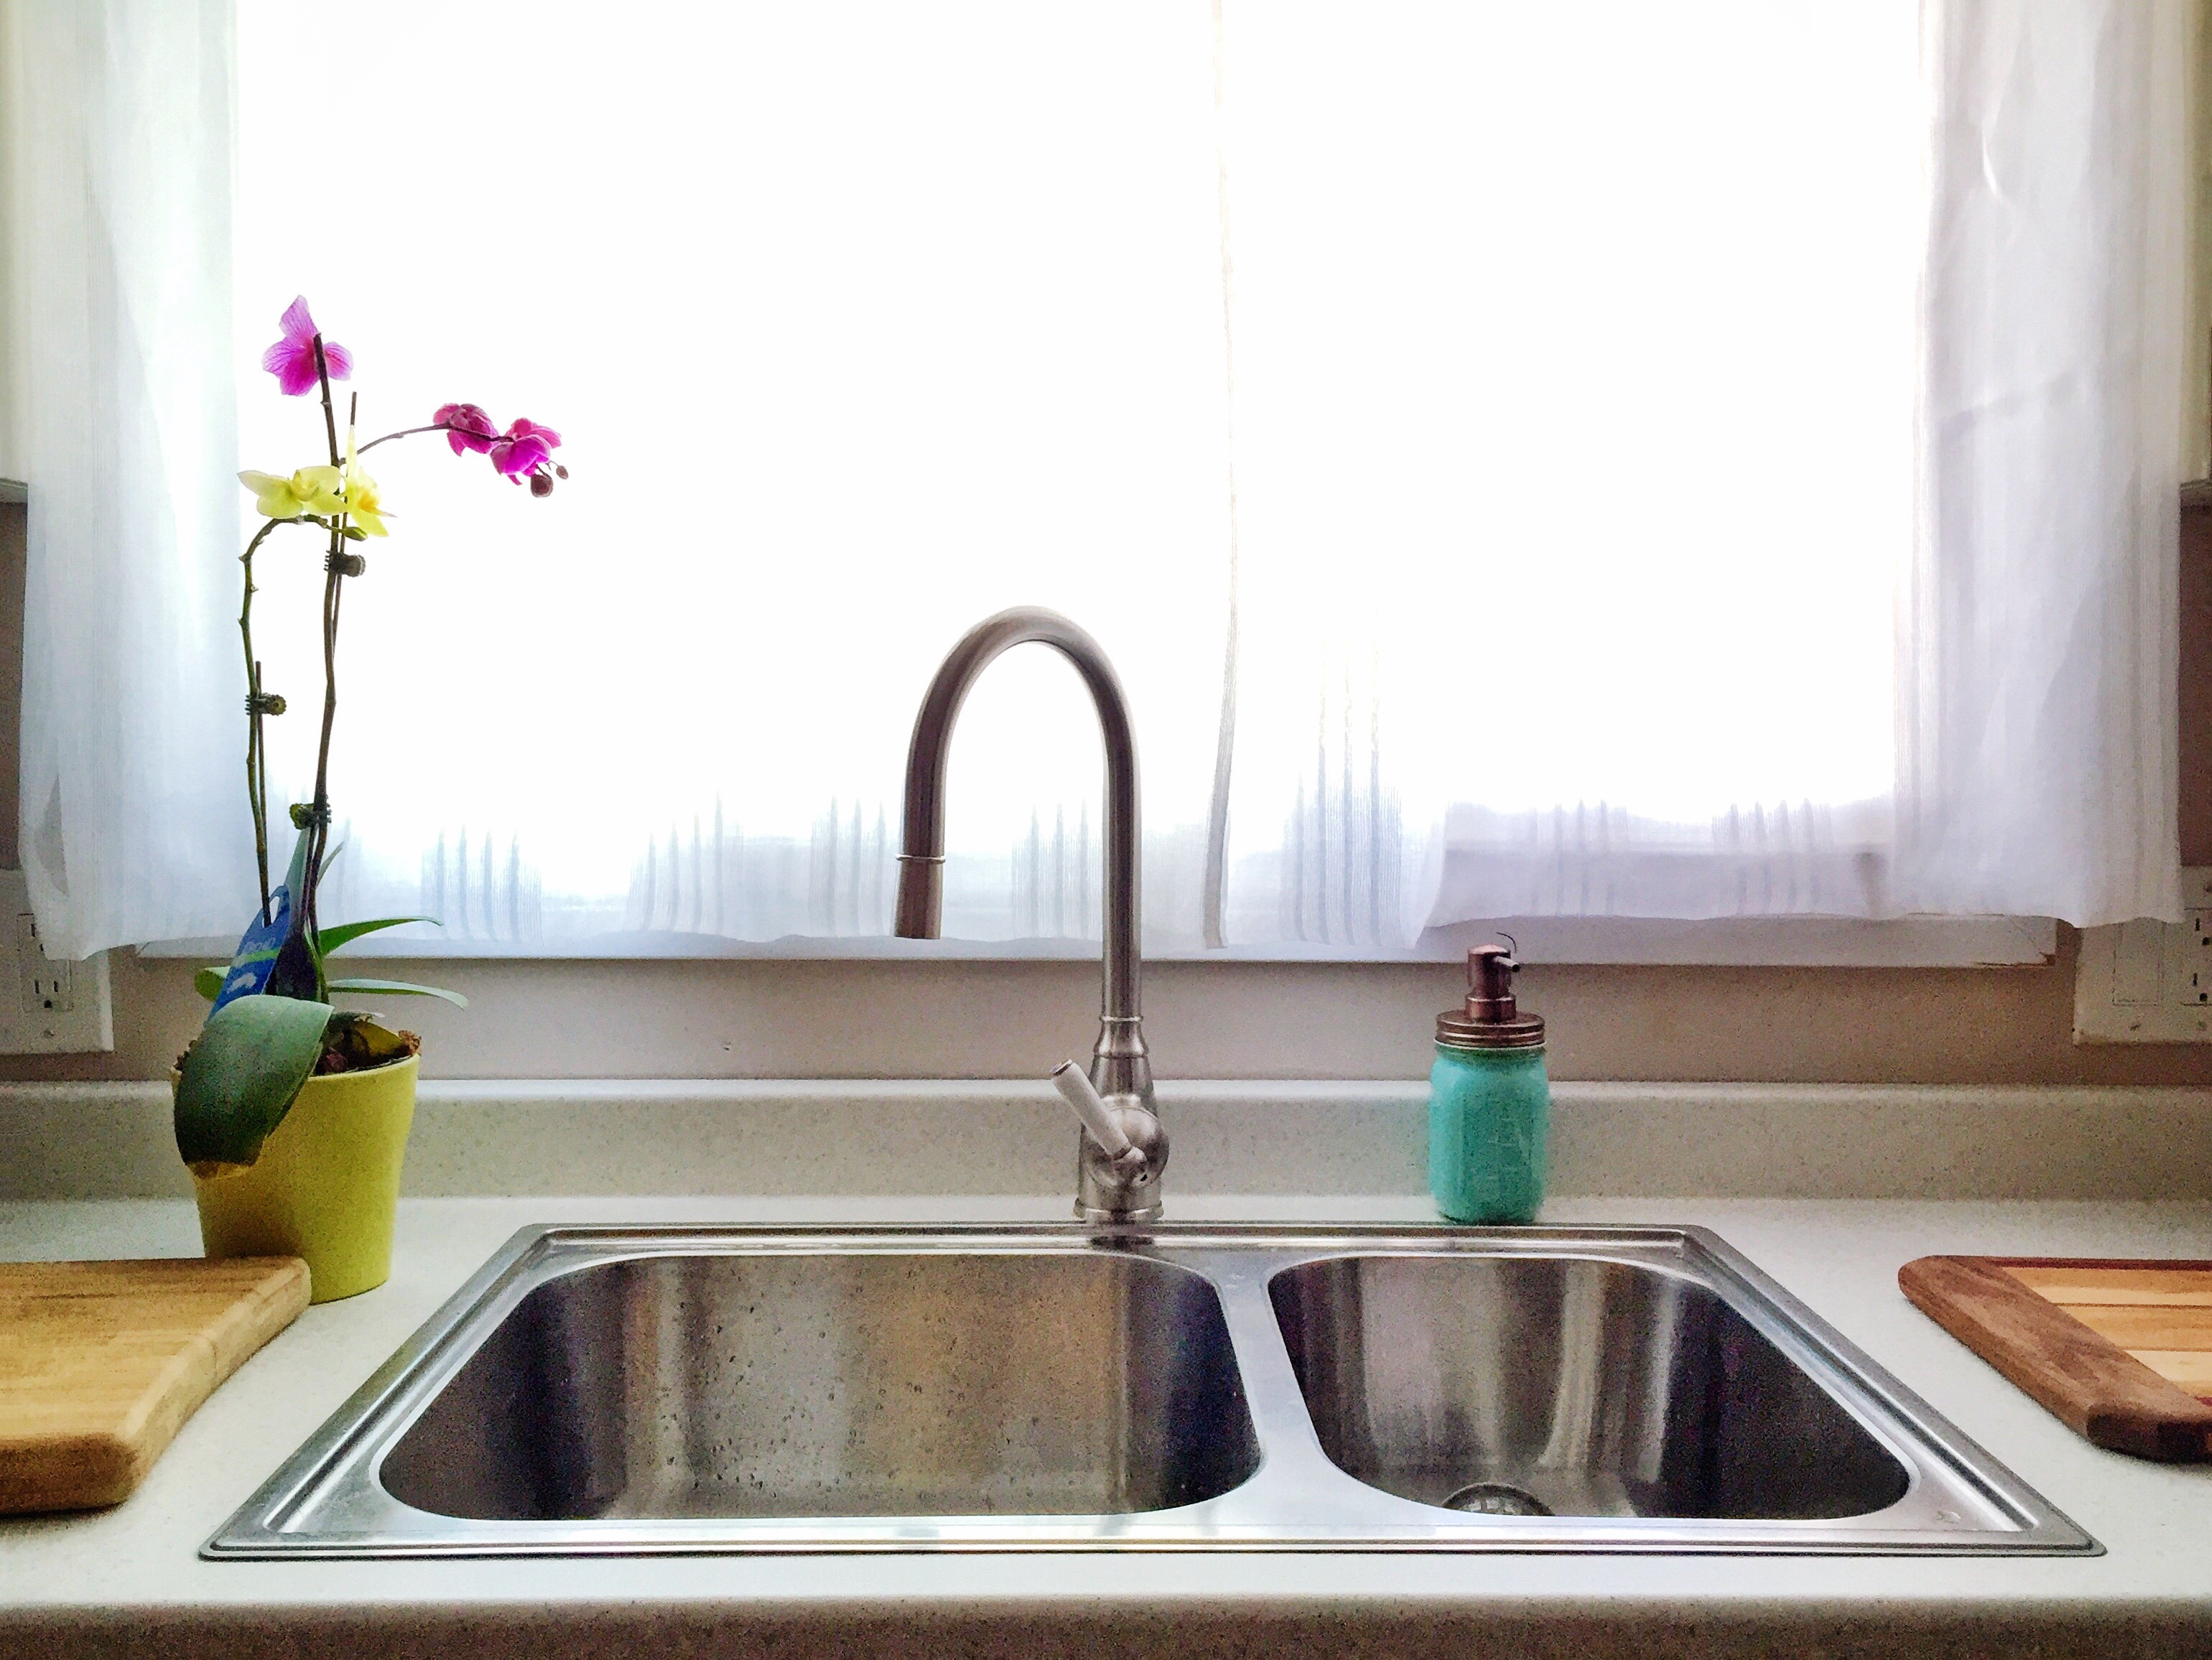 How to get rid of fruit flies kitchen sink